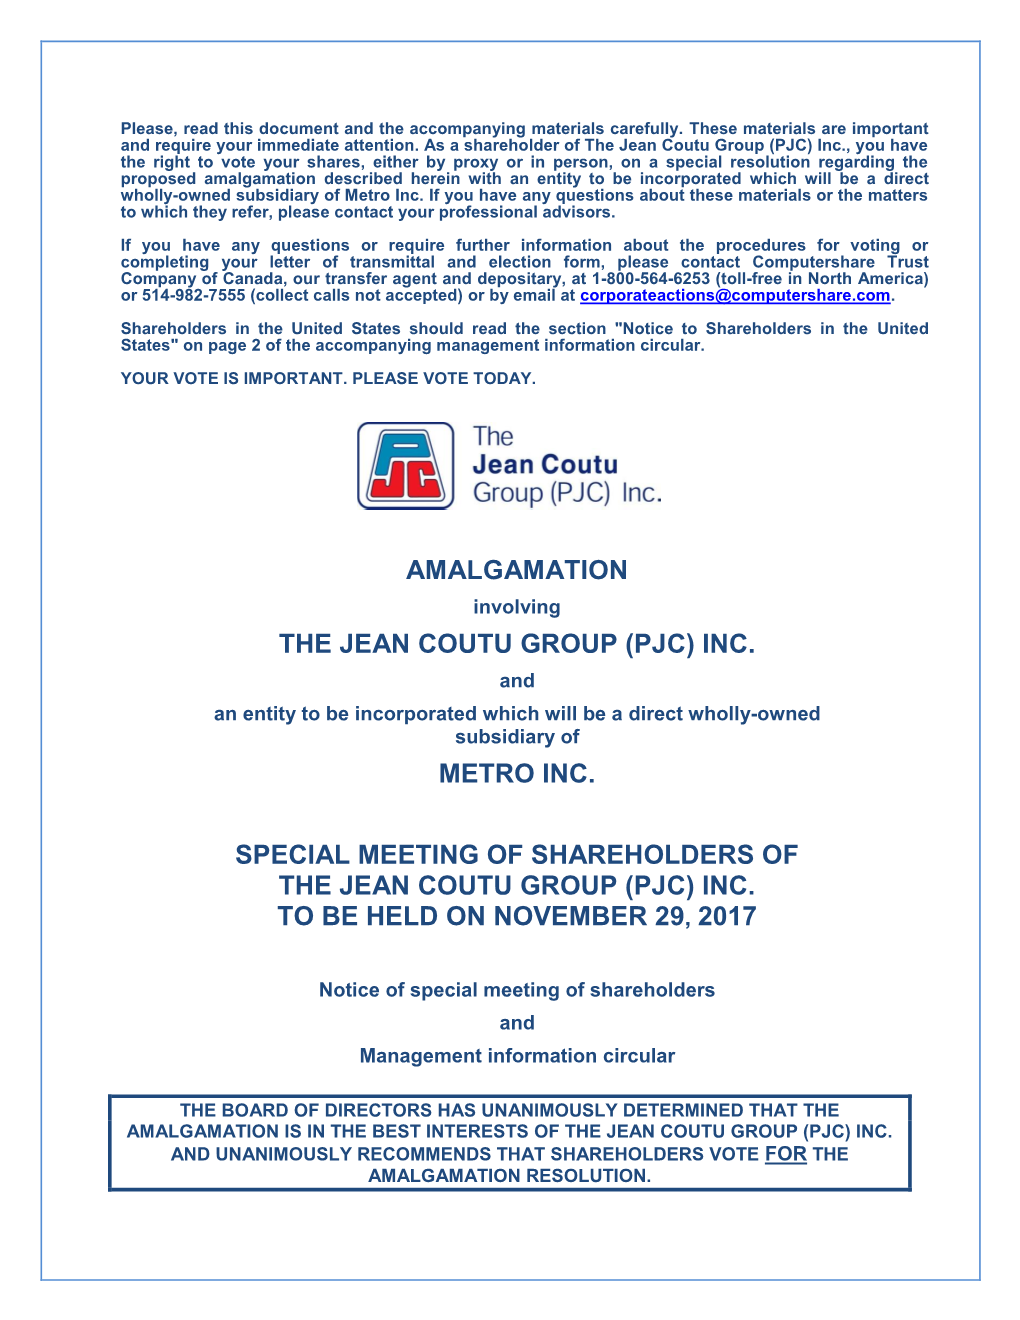 Amalgamation the Jean Coutu Group (Pjc)